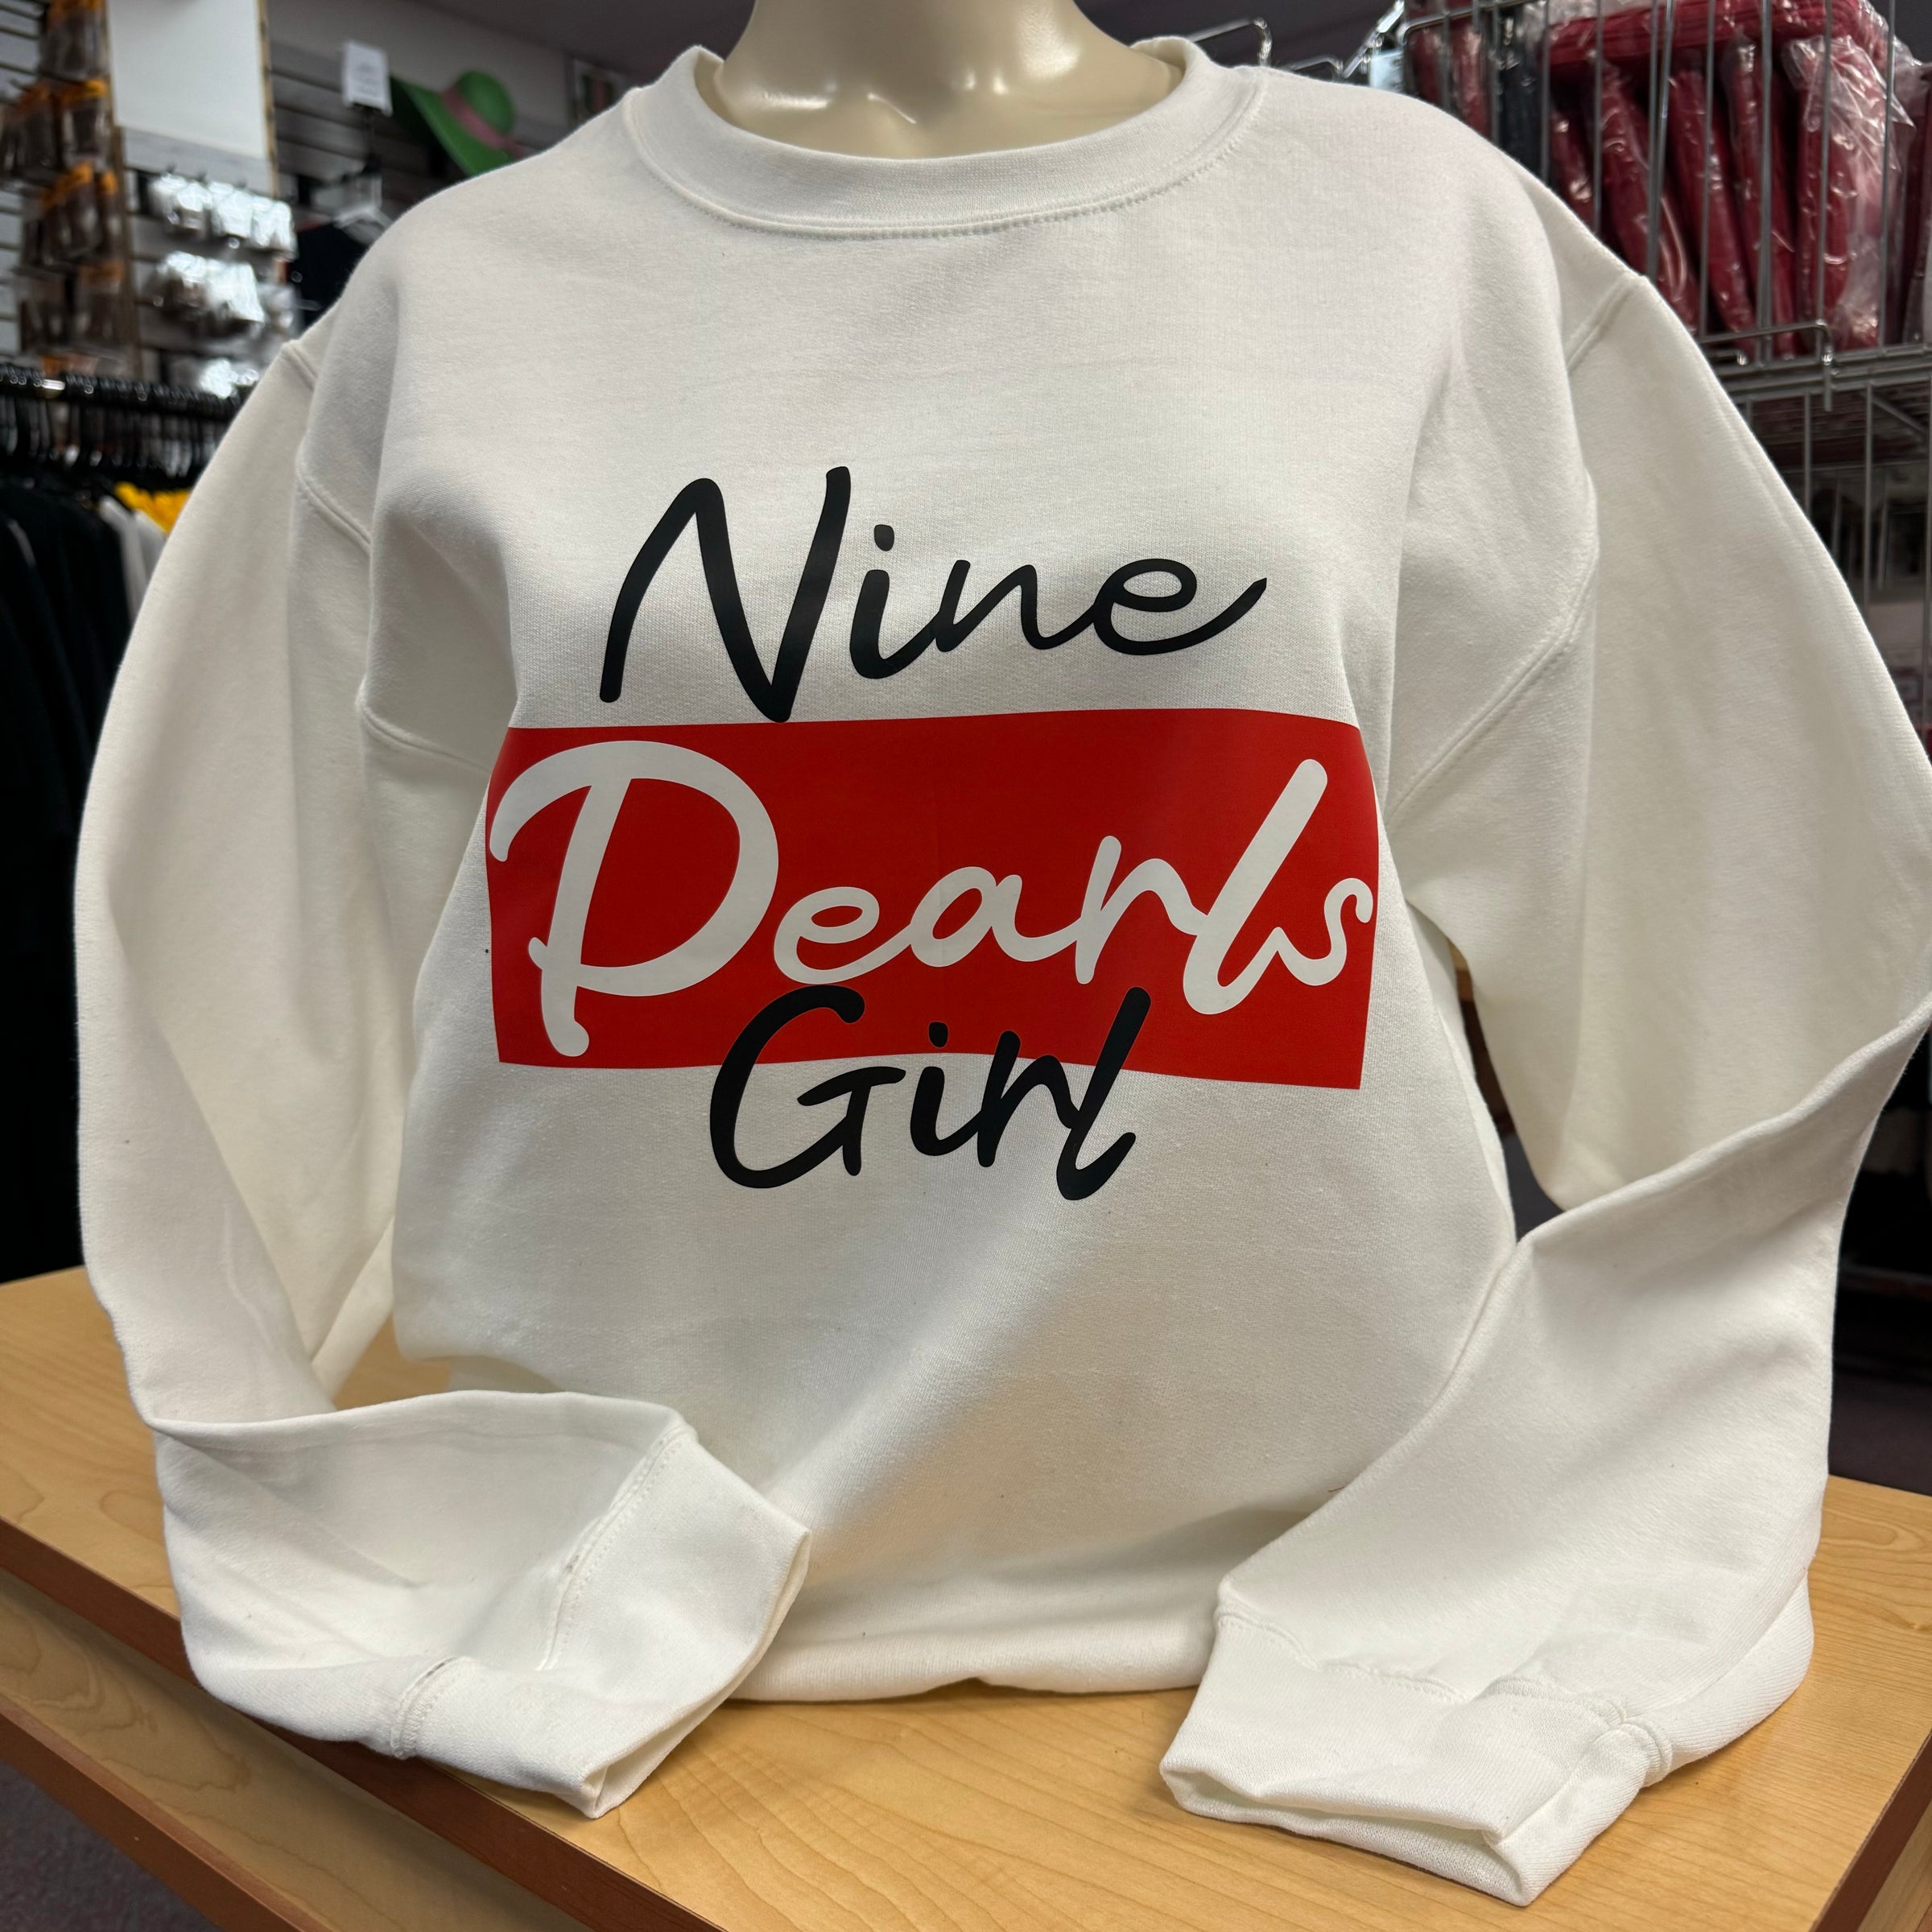 Delta Nine Pearls Girl Sweatshirt White